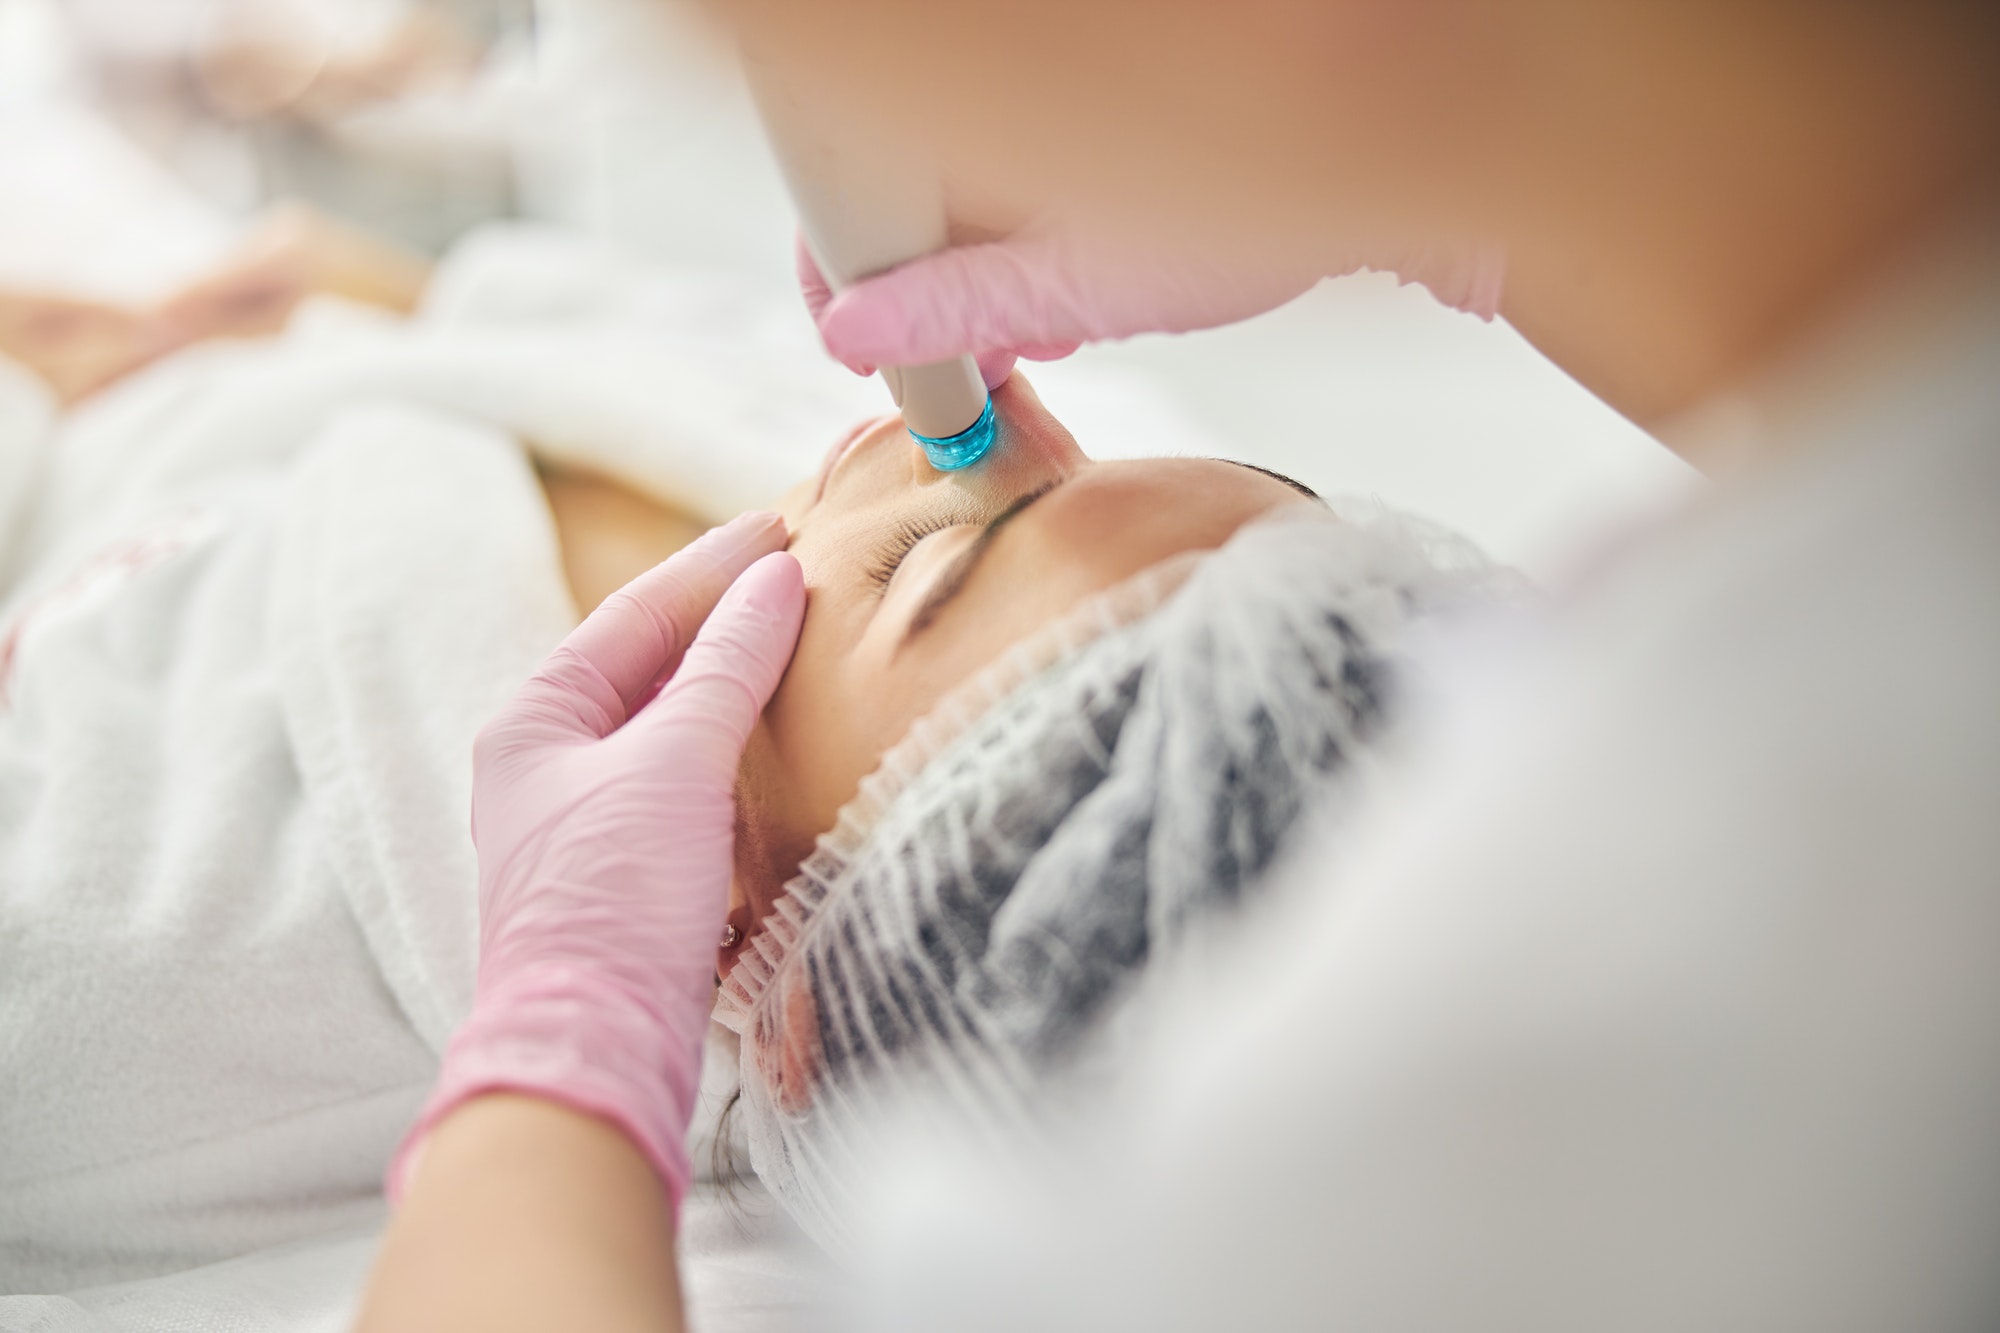 Young Caucasian female undergoing a dermatological procedure